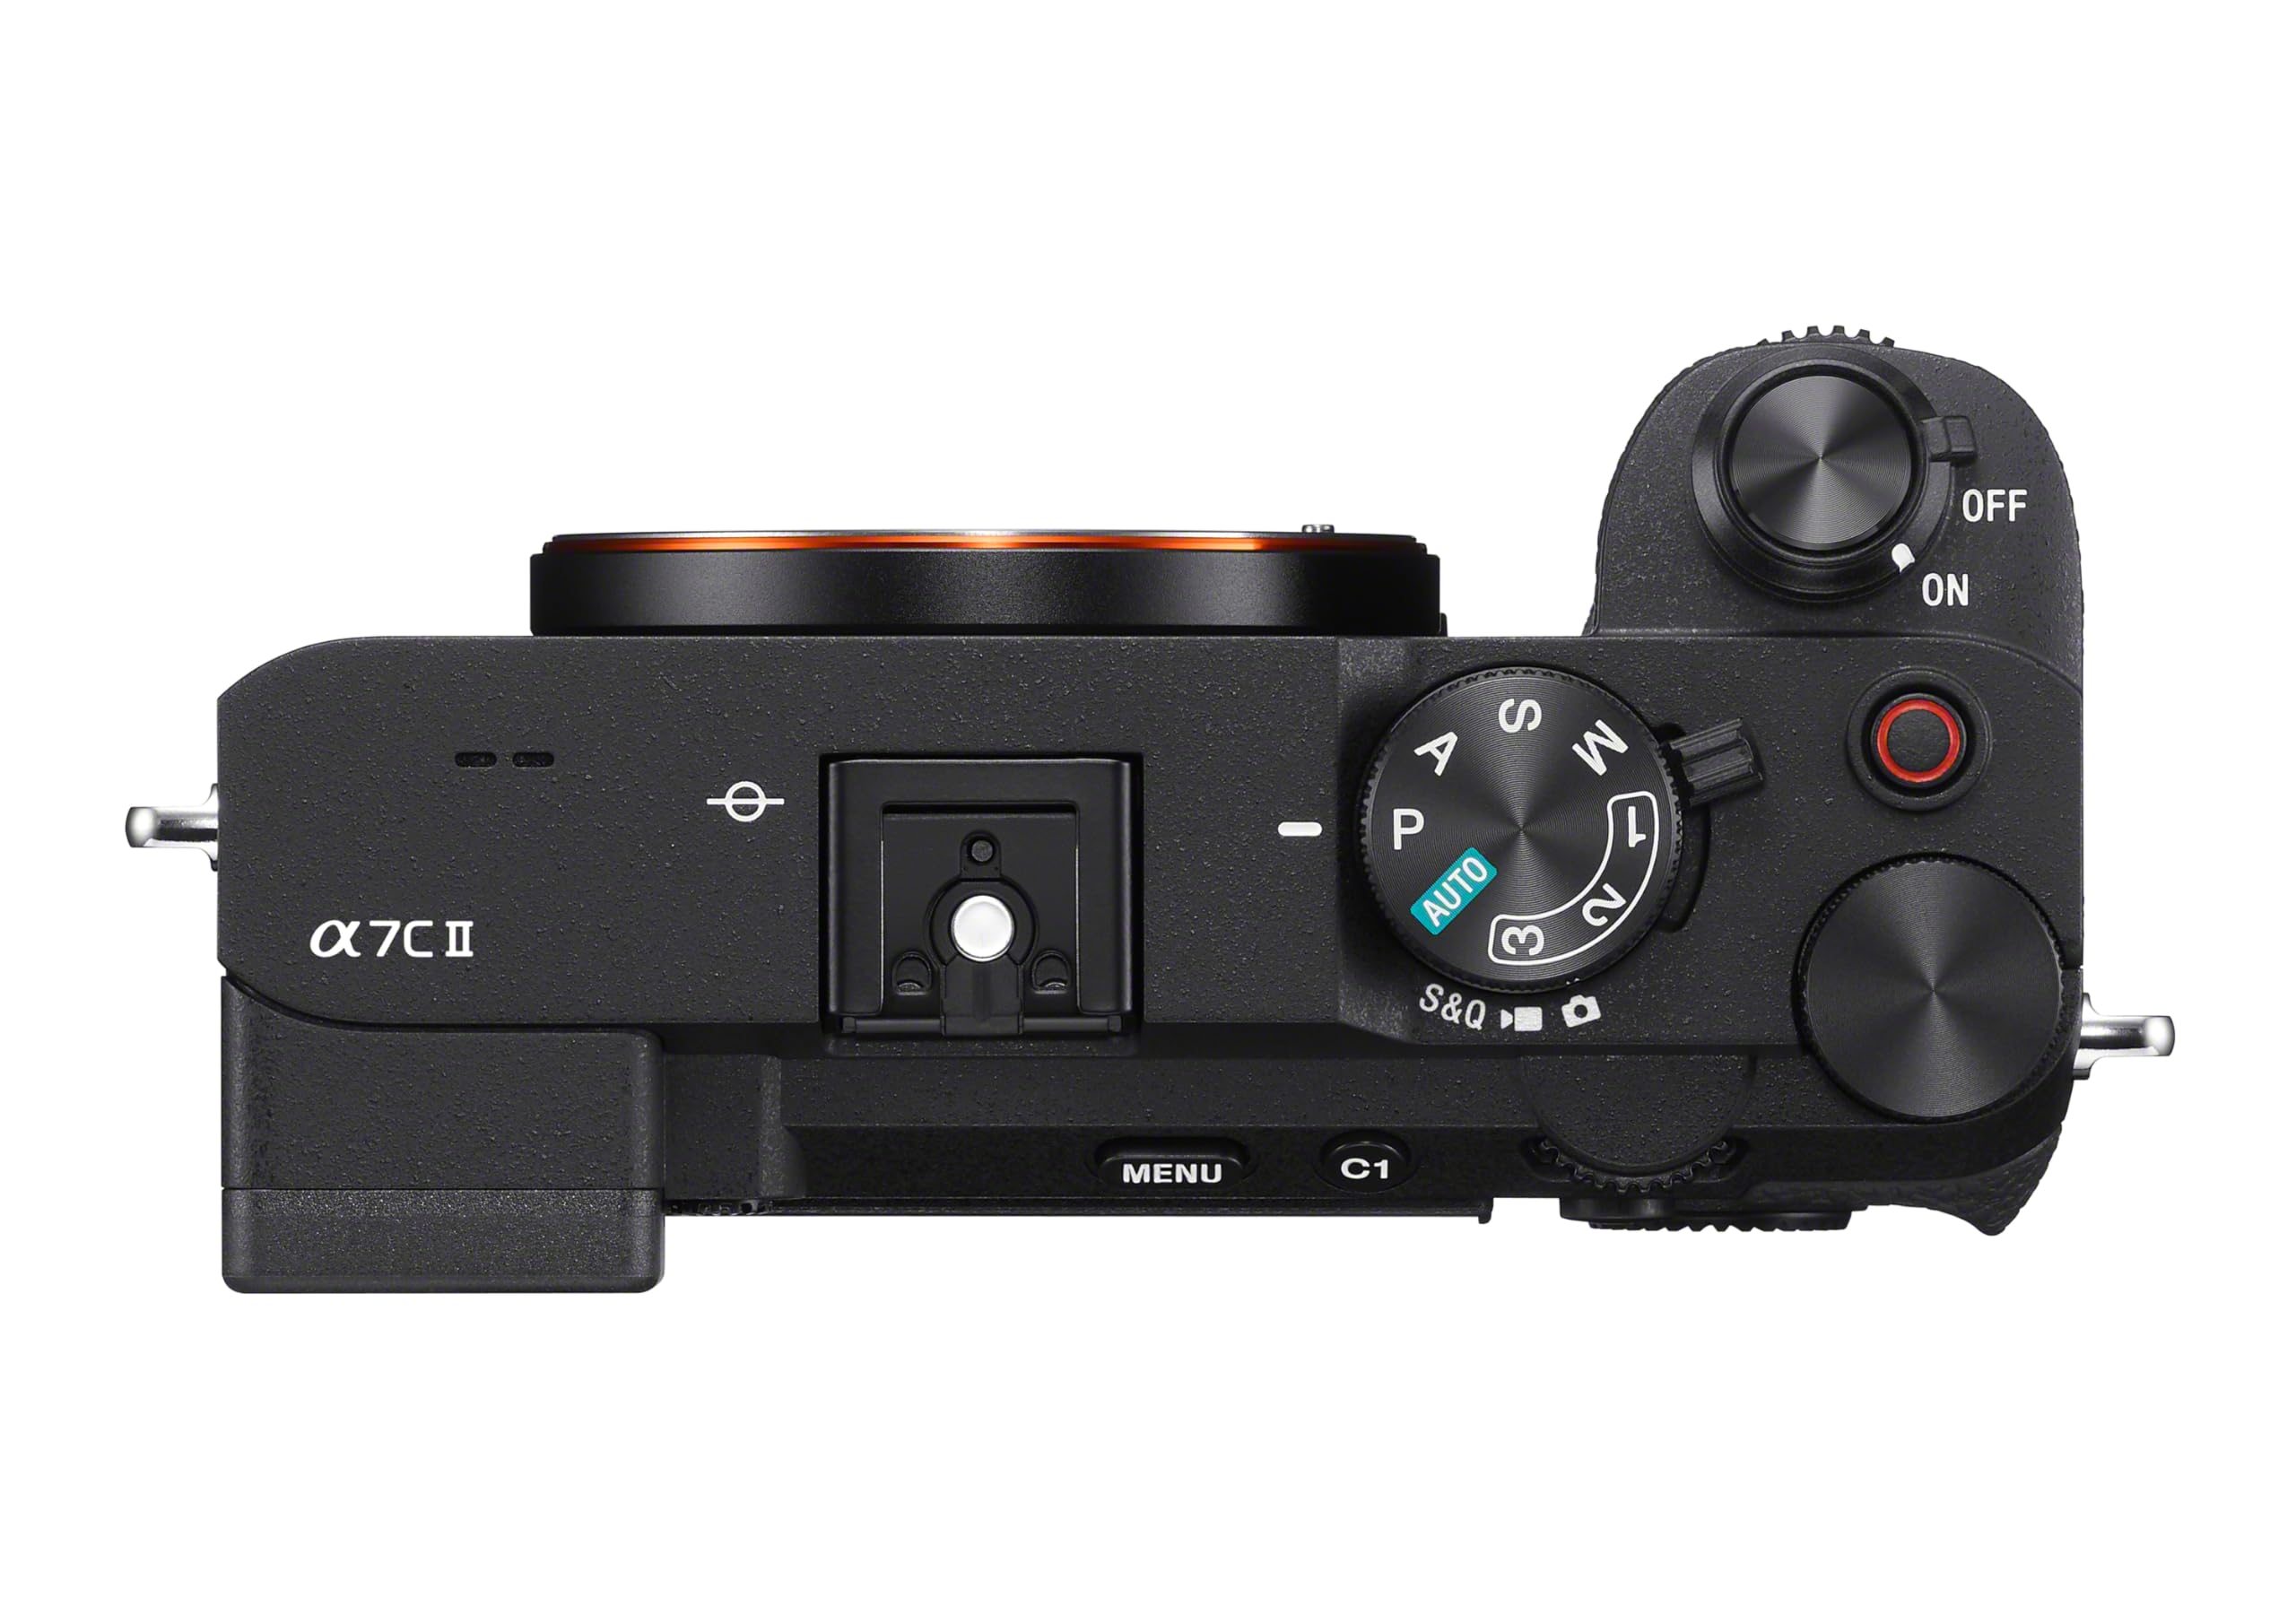 Sony Alpha 7CⅡ ILCE-7CM2 Black | Versatile Compact Full-frame Camera, Body Only, Black, 1 Year Warranty